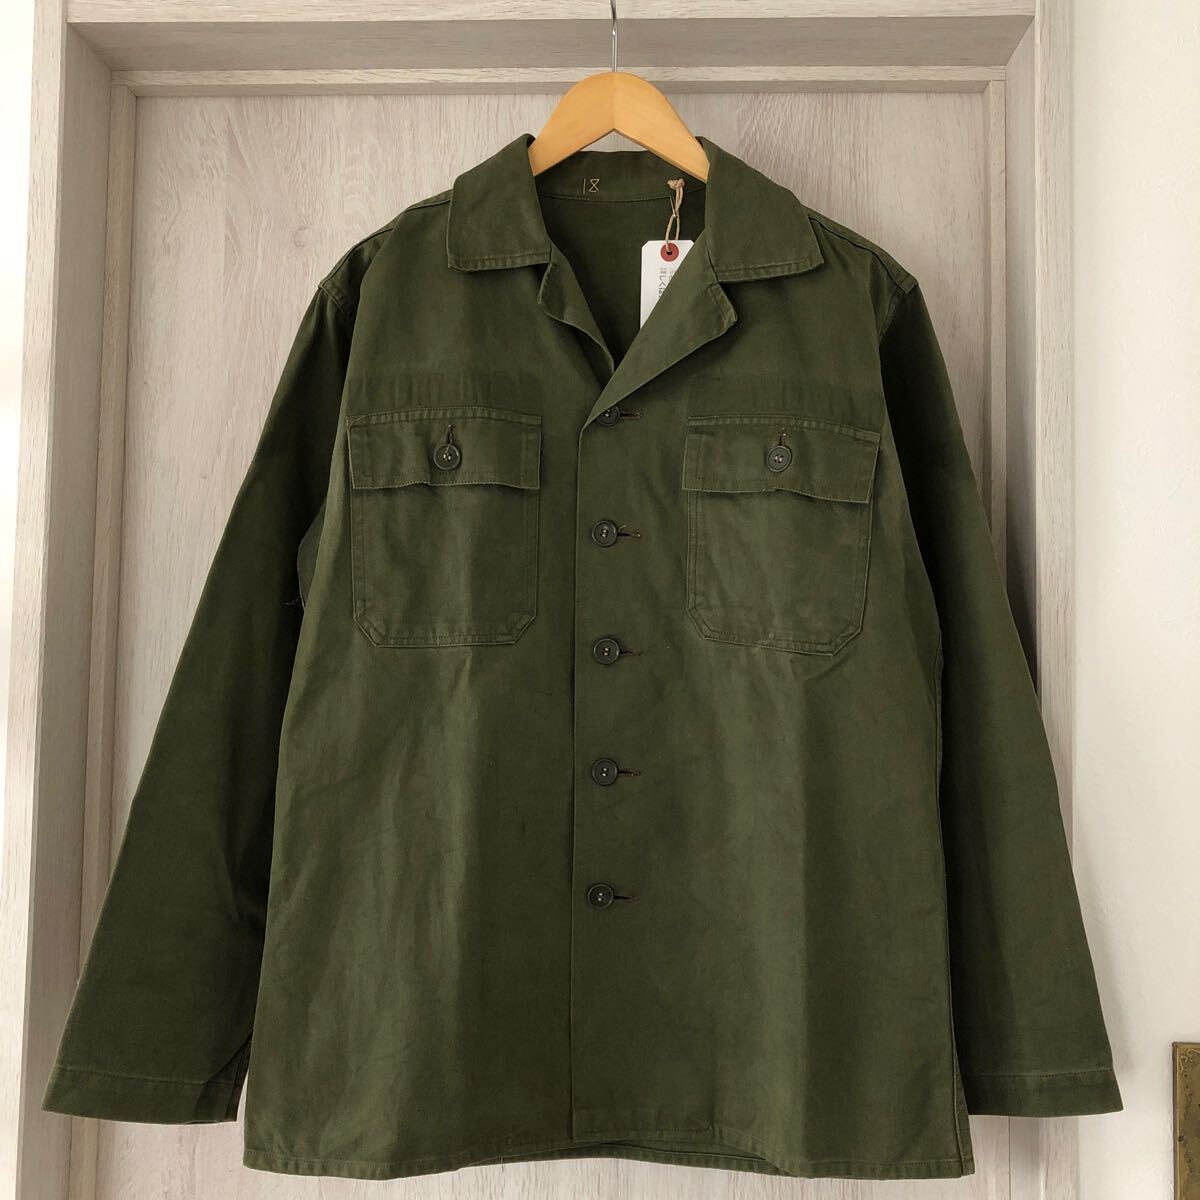 (k) 50s 50 period US ARMY OG-107 1st military shirt jacket khaki green 